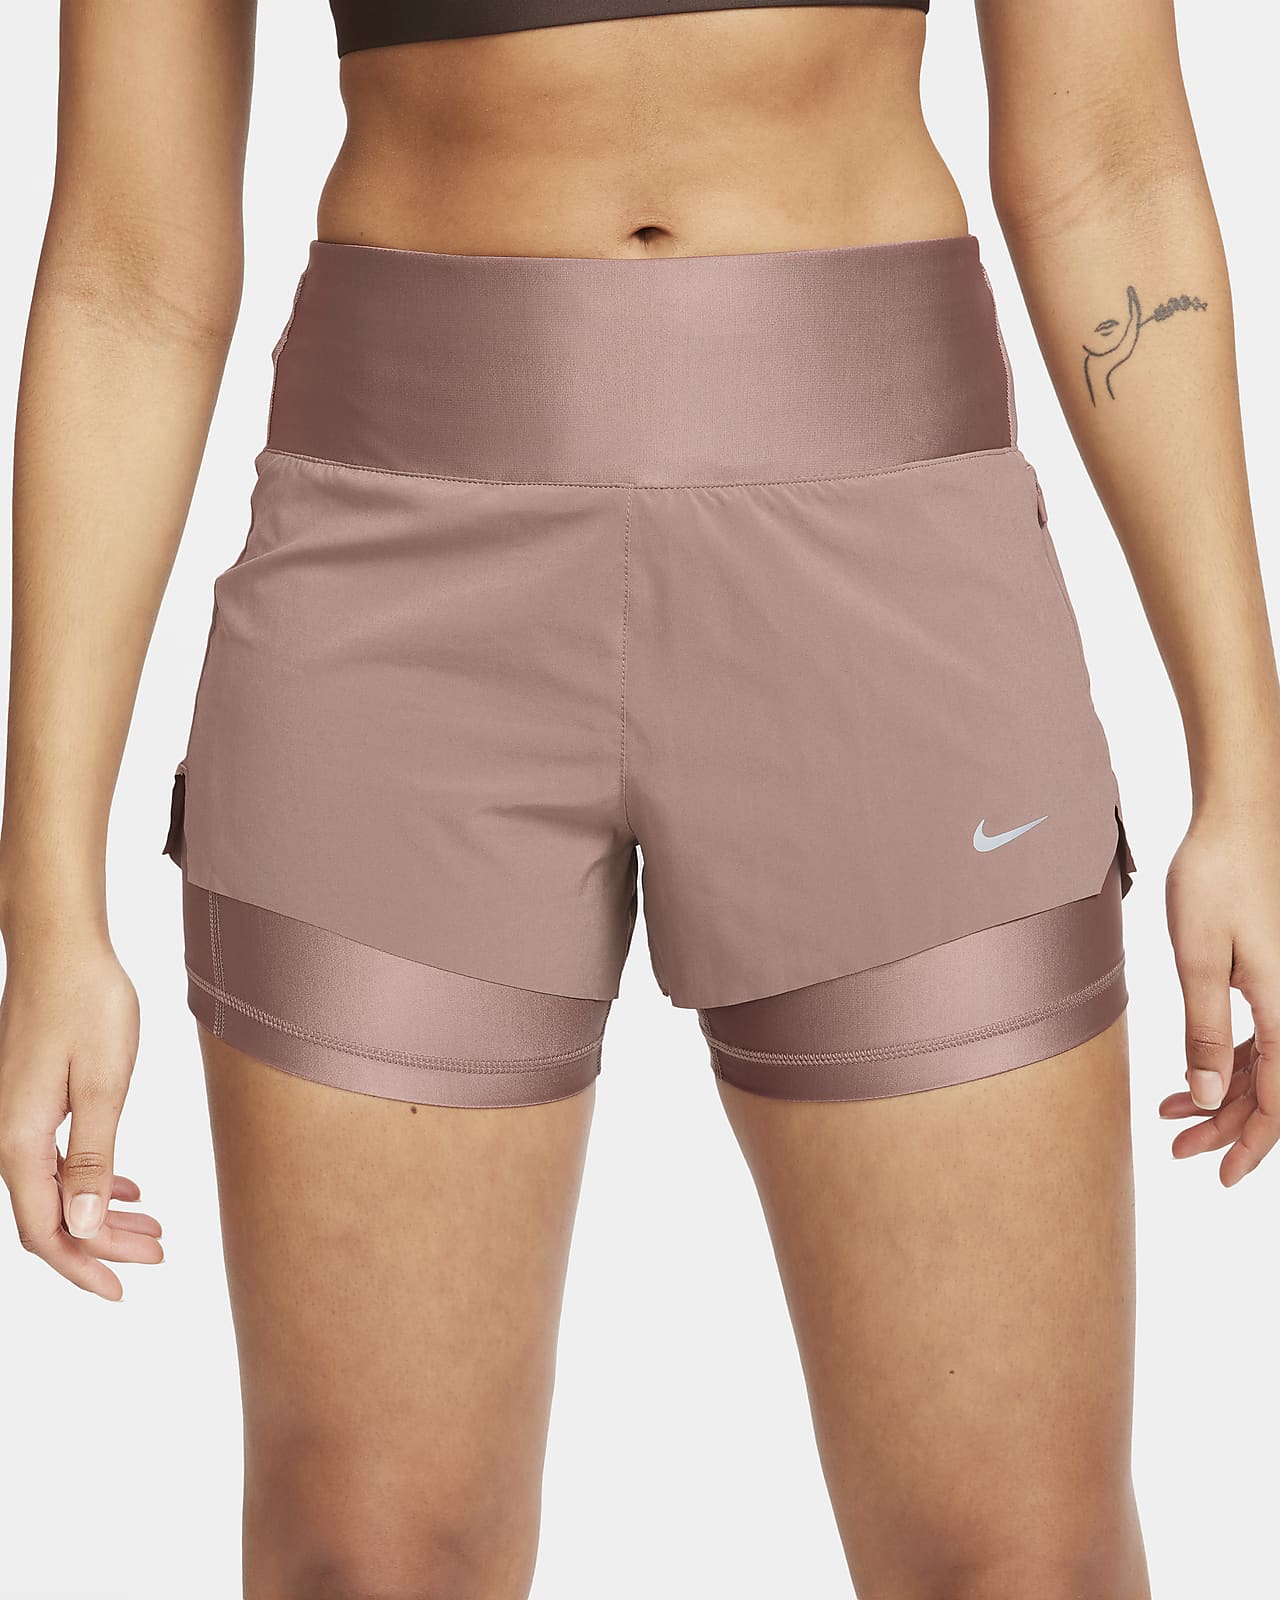 Women's Running Shorts - Running Shorts With Pockets